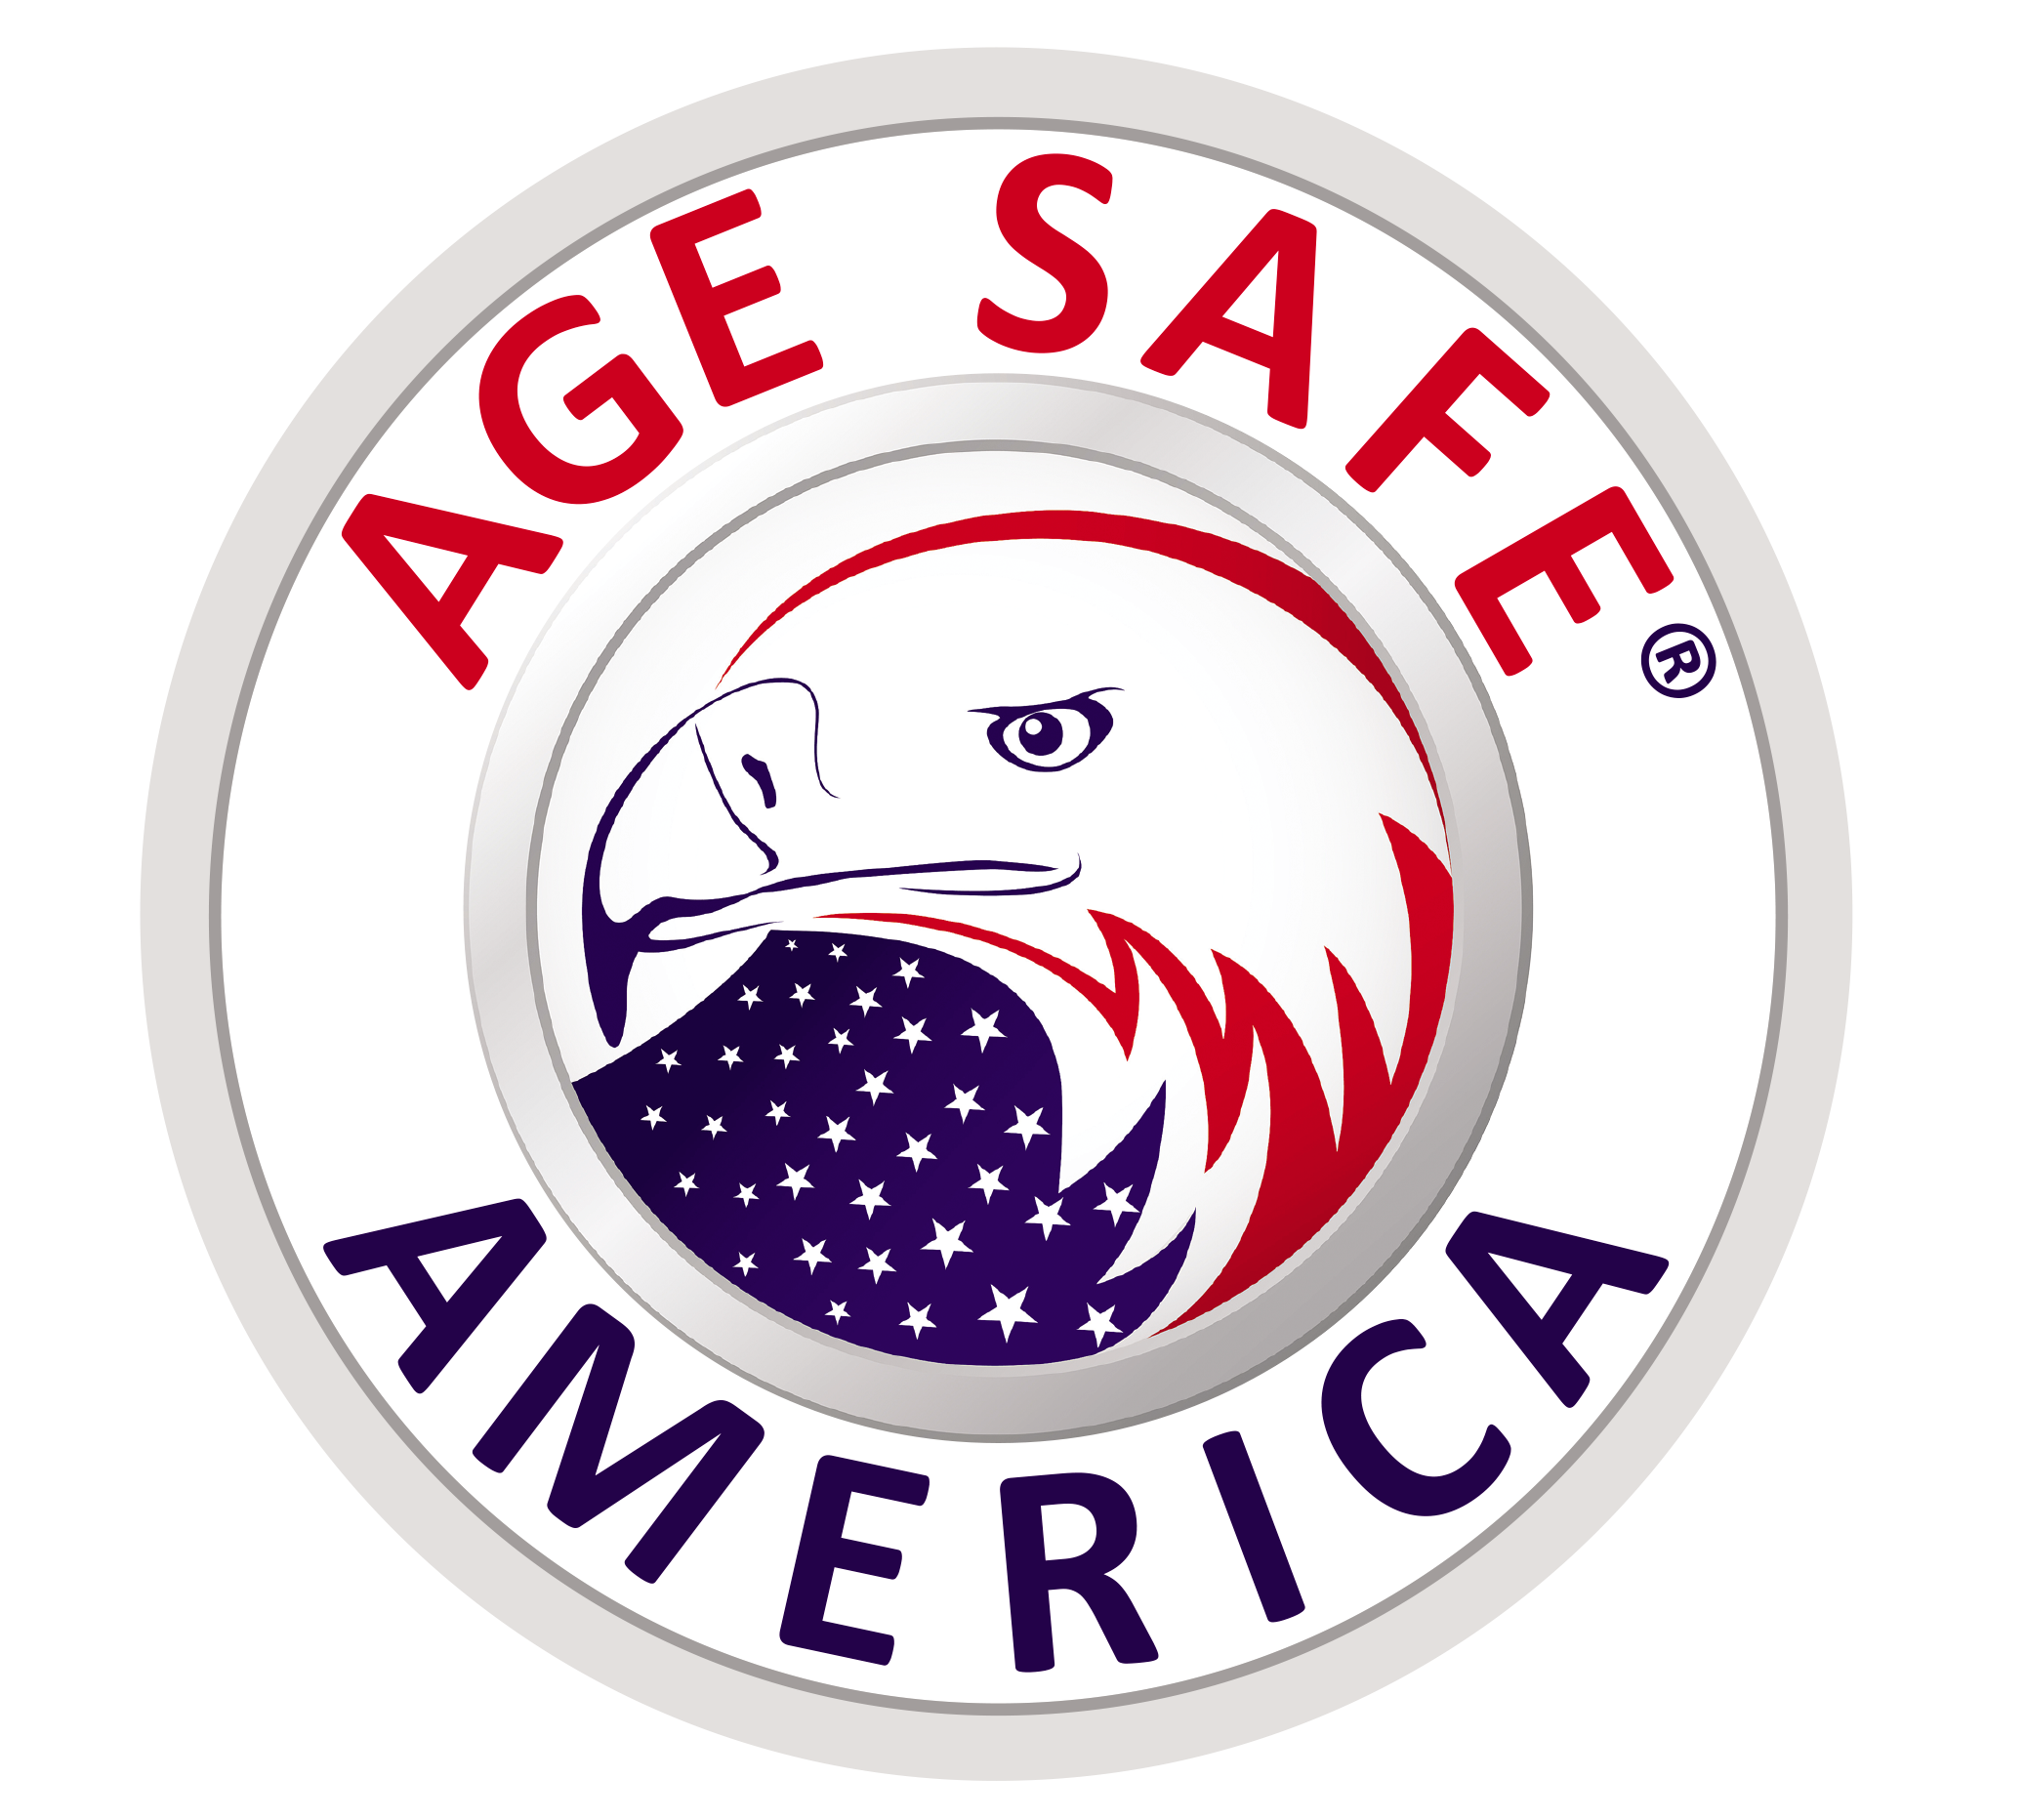 Age Safe America logo.